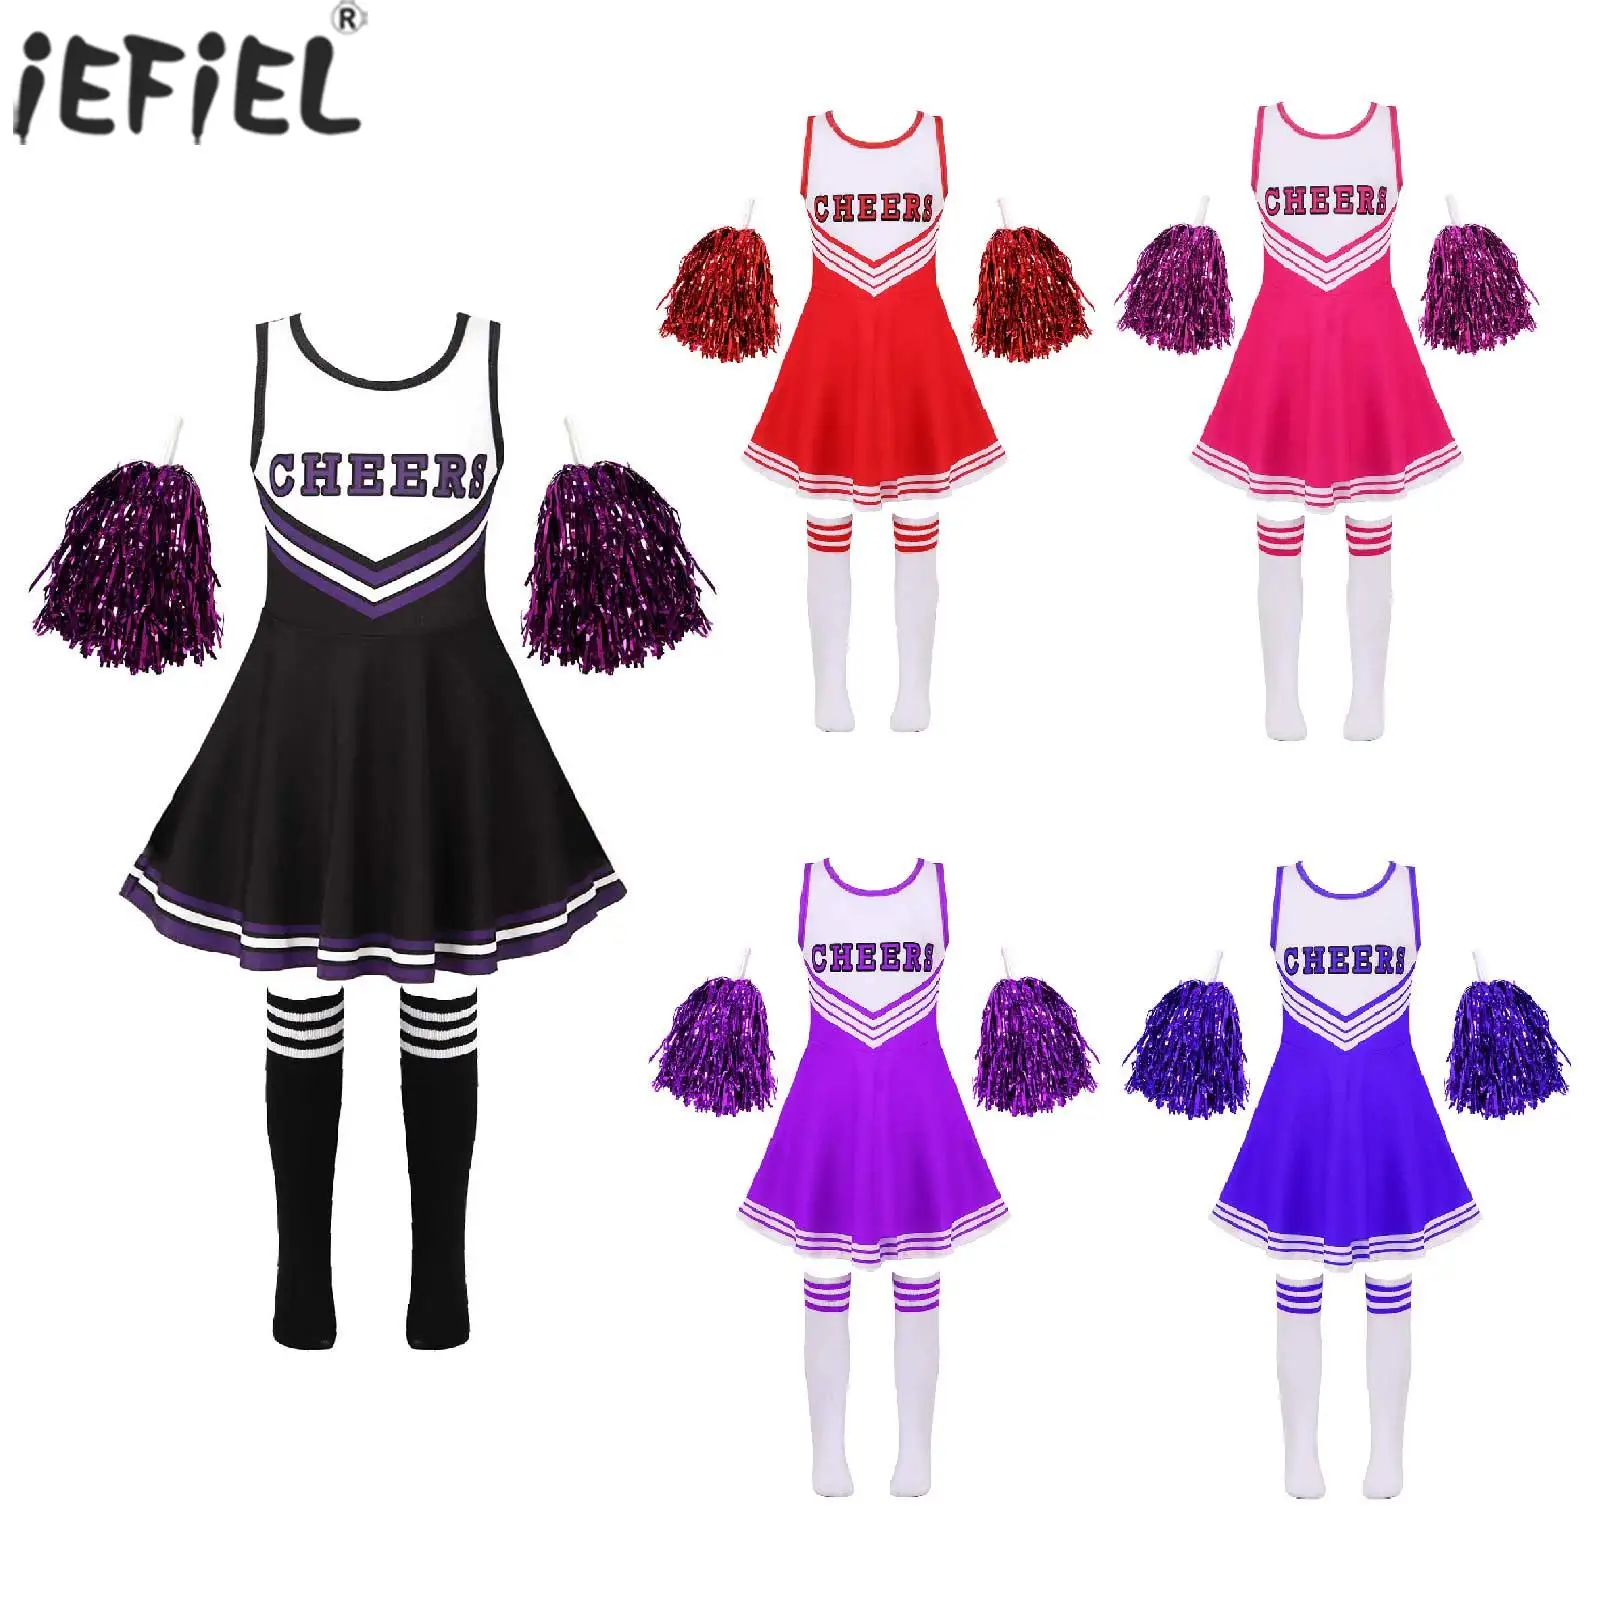 

High Schoolgirls Cheer Leader Uniform Dance Cheerleading Dress Outfit with Stockings 2 Pom Poms Halloween Cosplay Costume